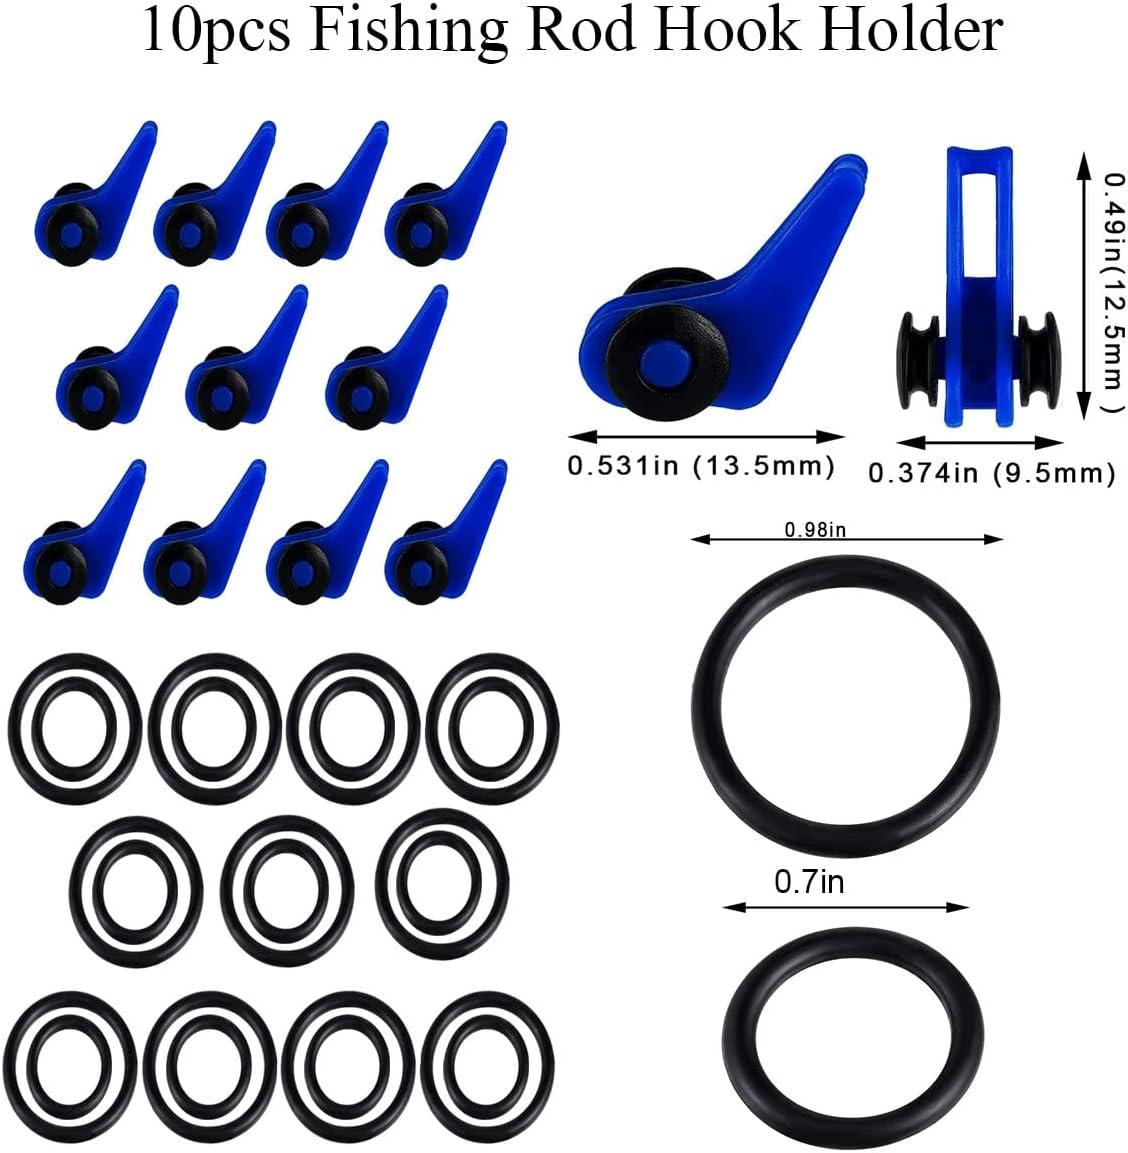 Deapeick 5pcs Fishing Biat Wraps with 10pcs Fishing Rod Hook